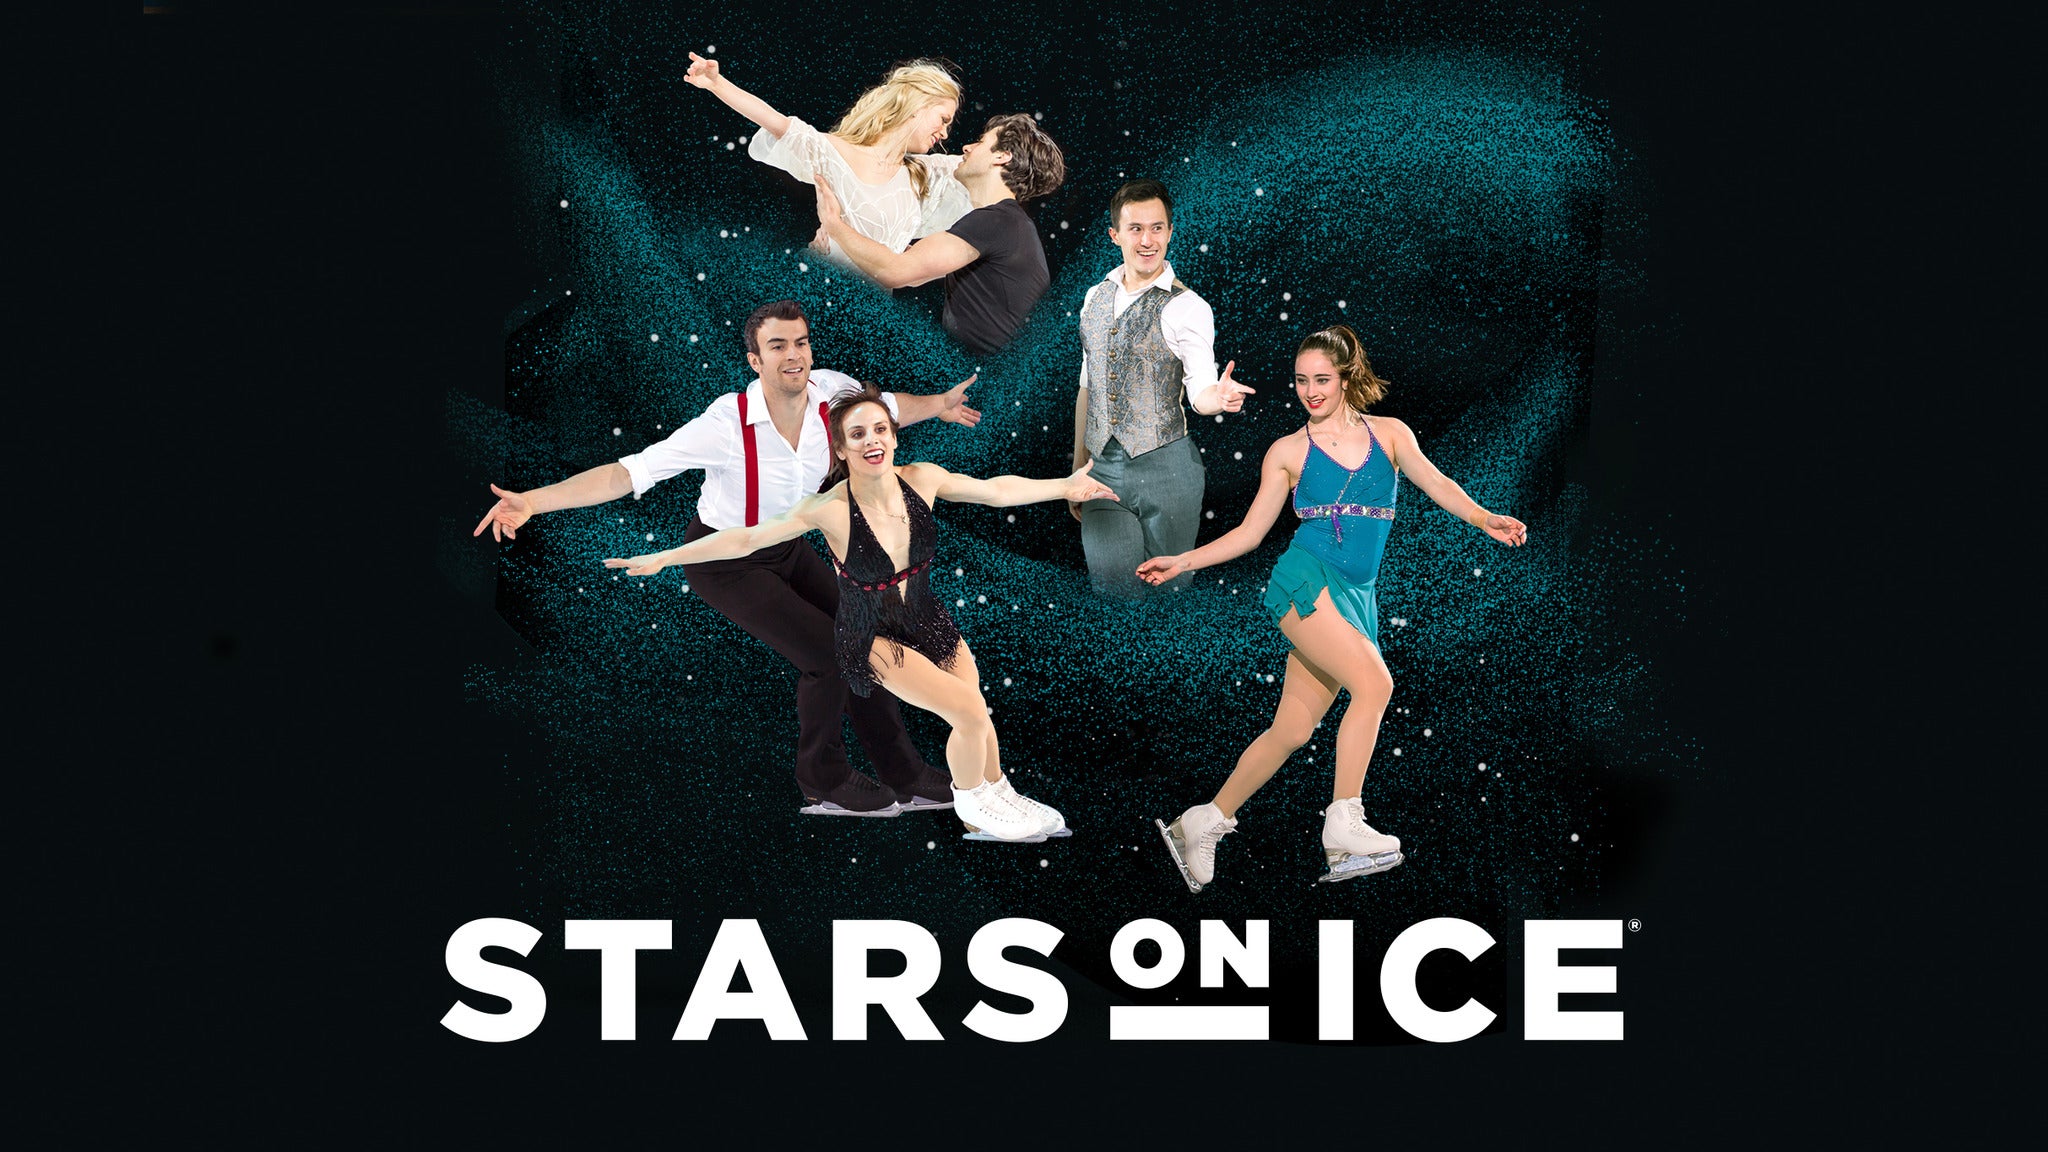 Stars on Ice - Canada in Edmonton promo photo for Internet presale offer code